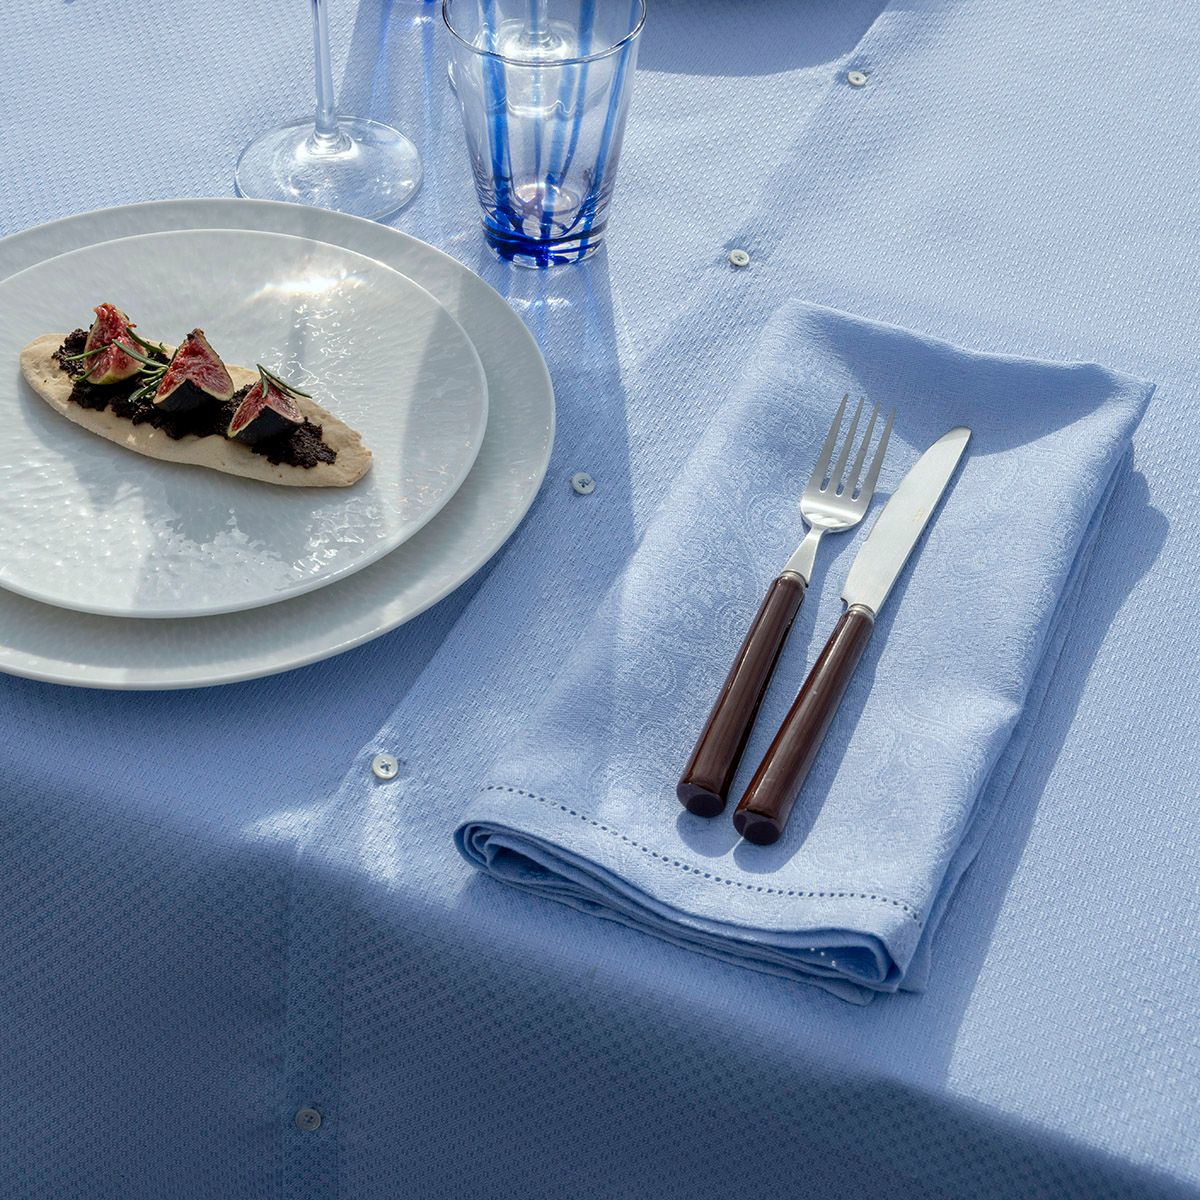 Portofino Fiori Blue Napkins & Placemats by Le Jacquard Français - Lifestyle